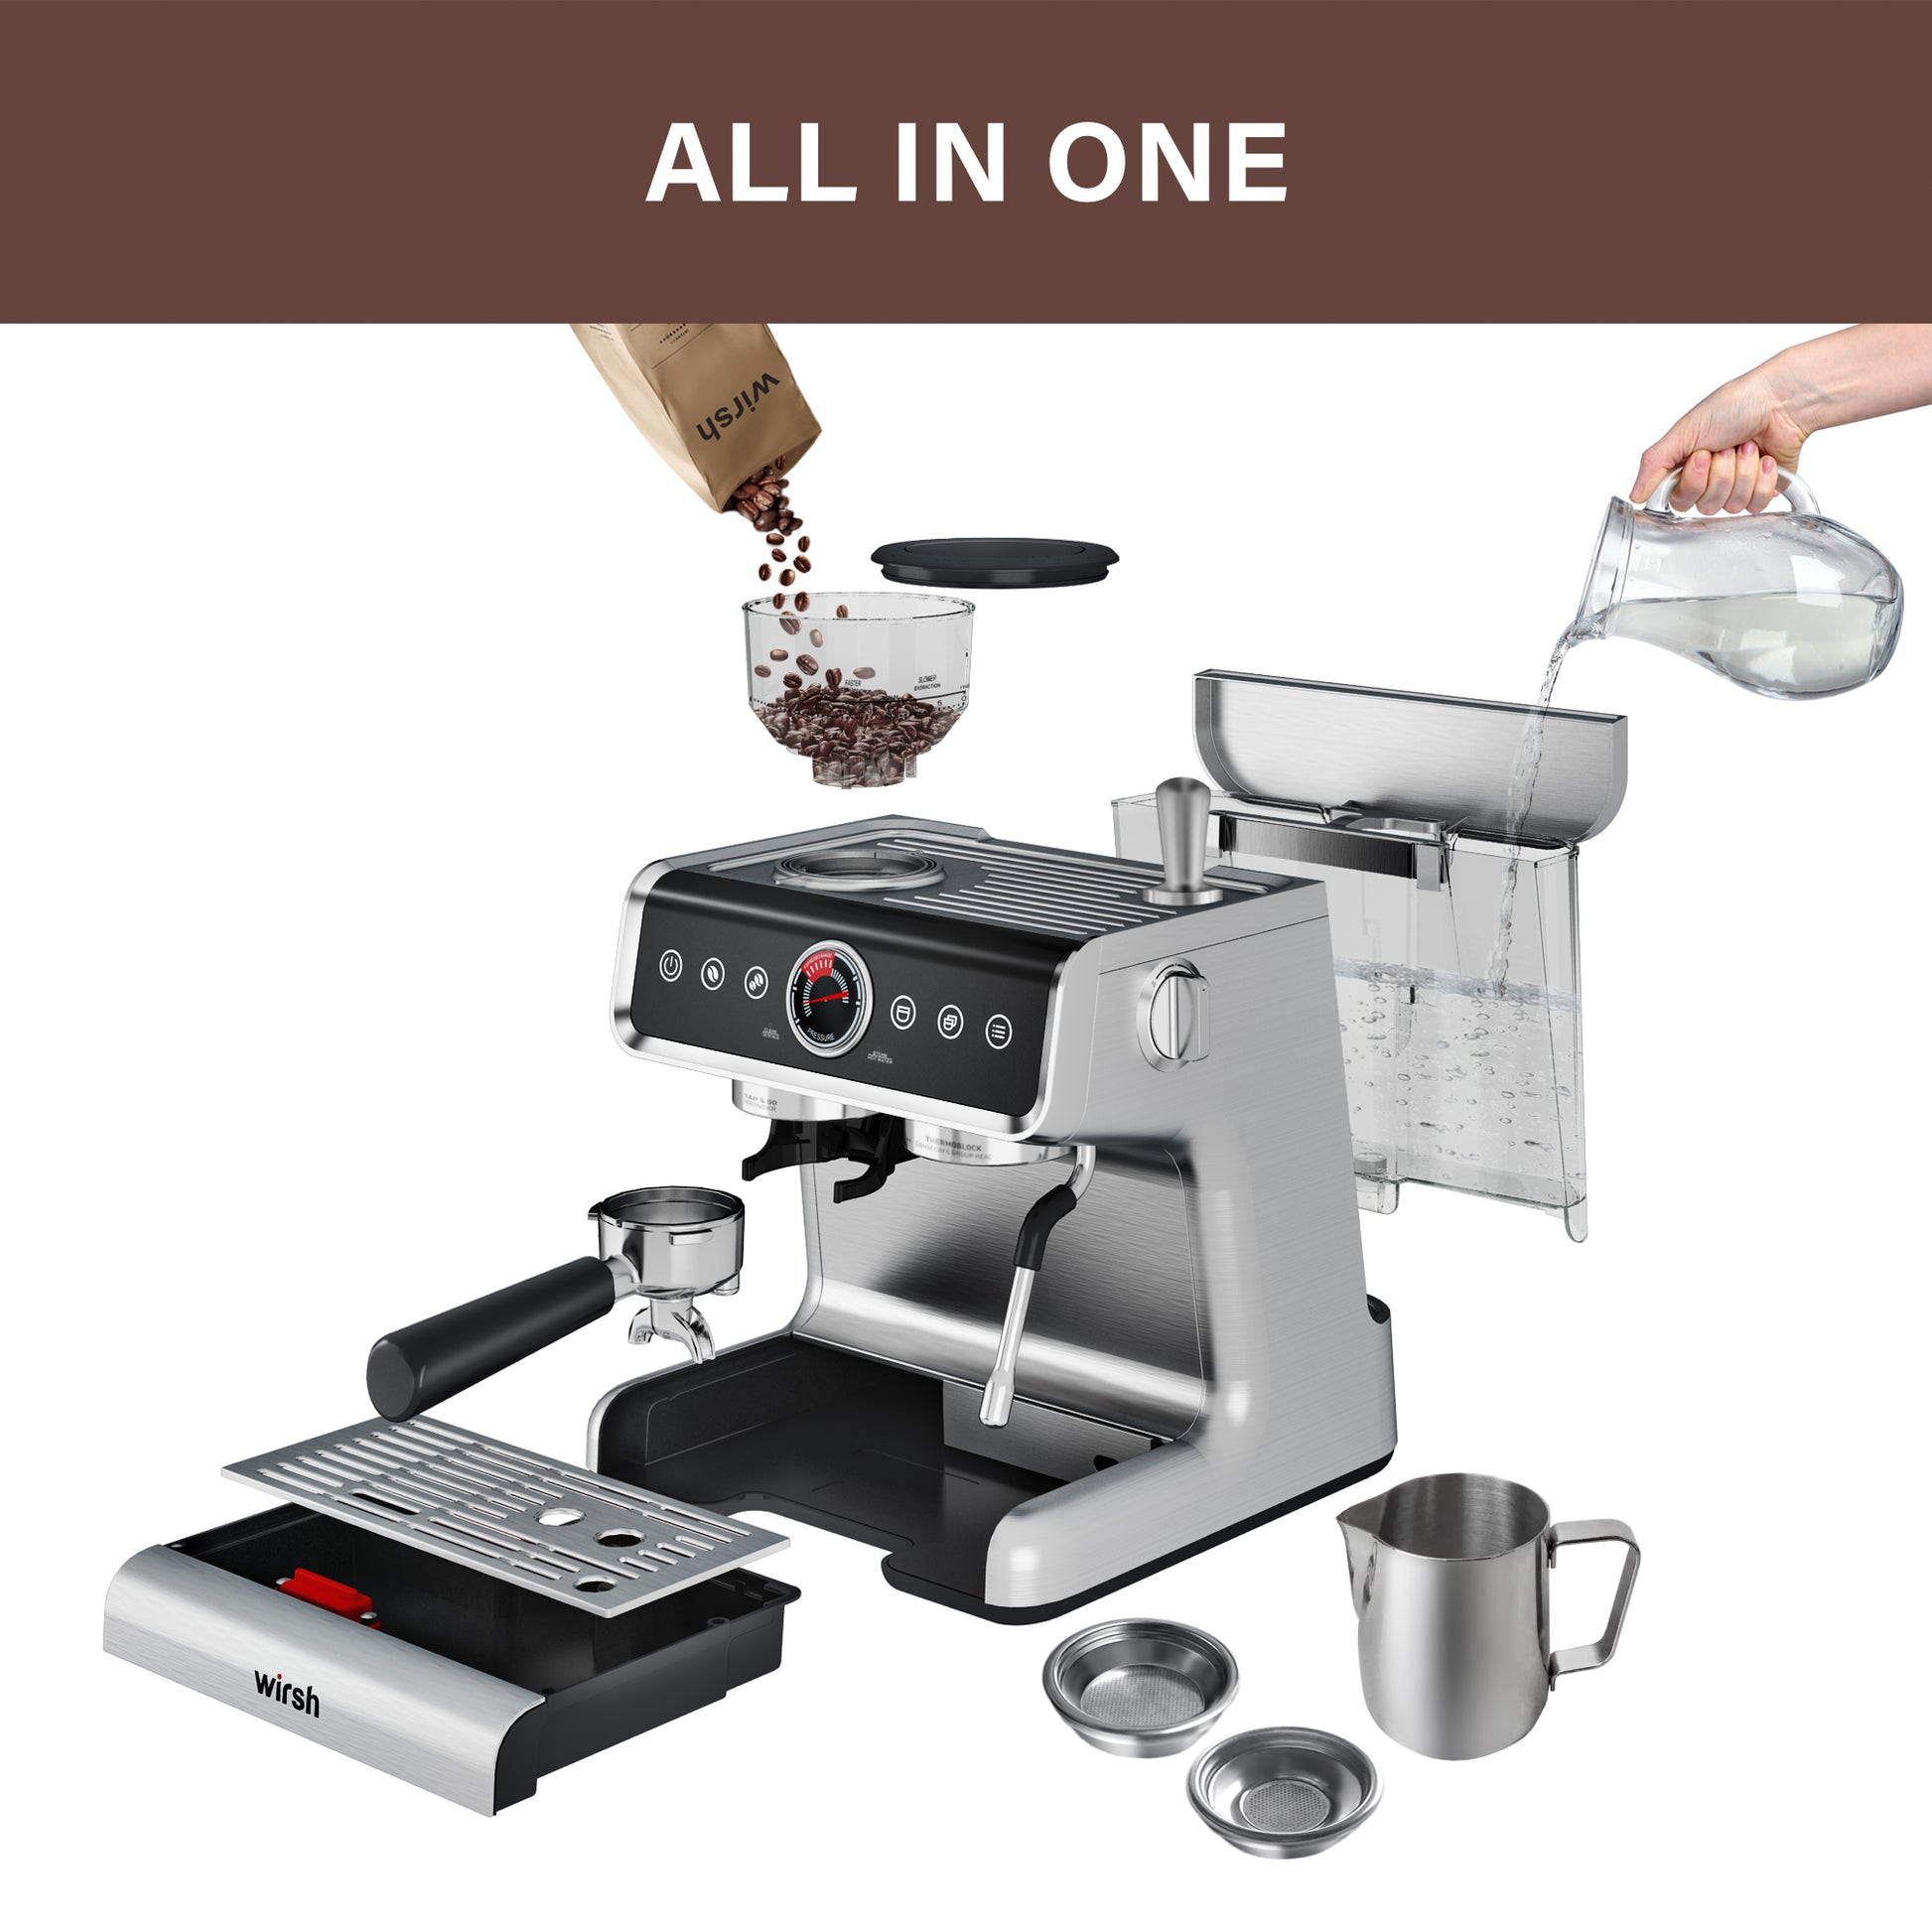 <img src="espresso machine.jpg" alt="wirsh espresso machine all in one kit"/>